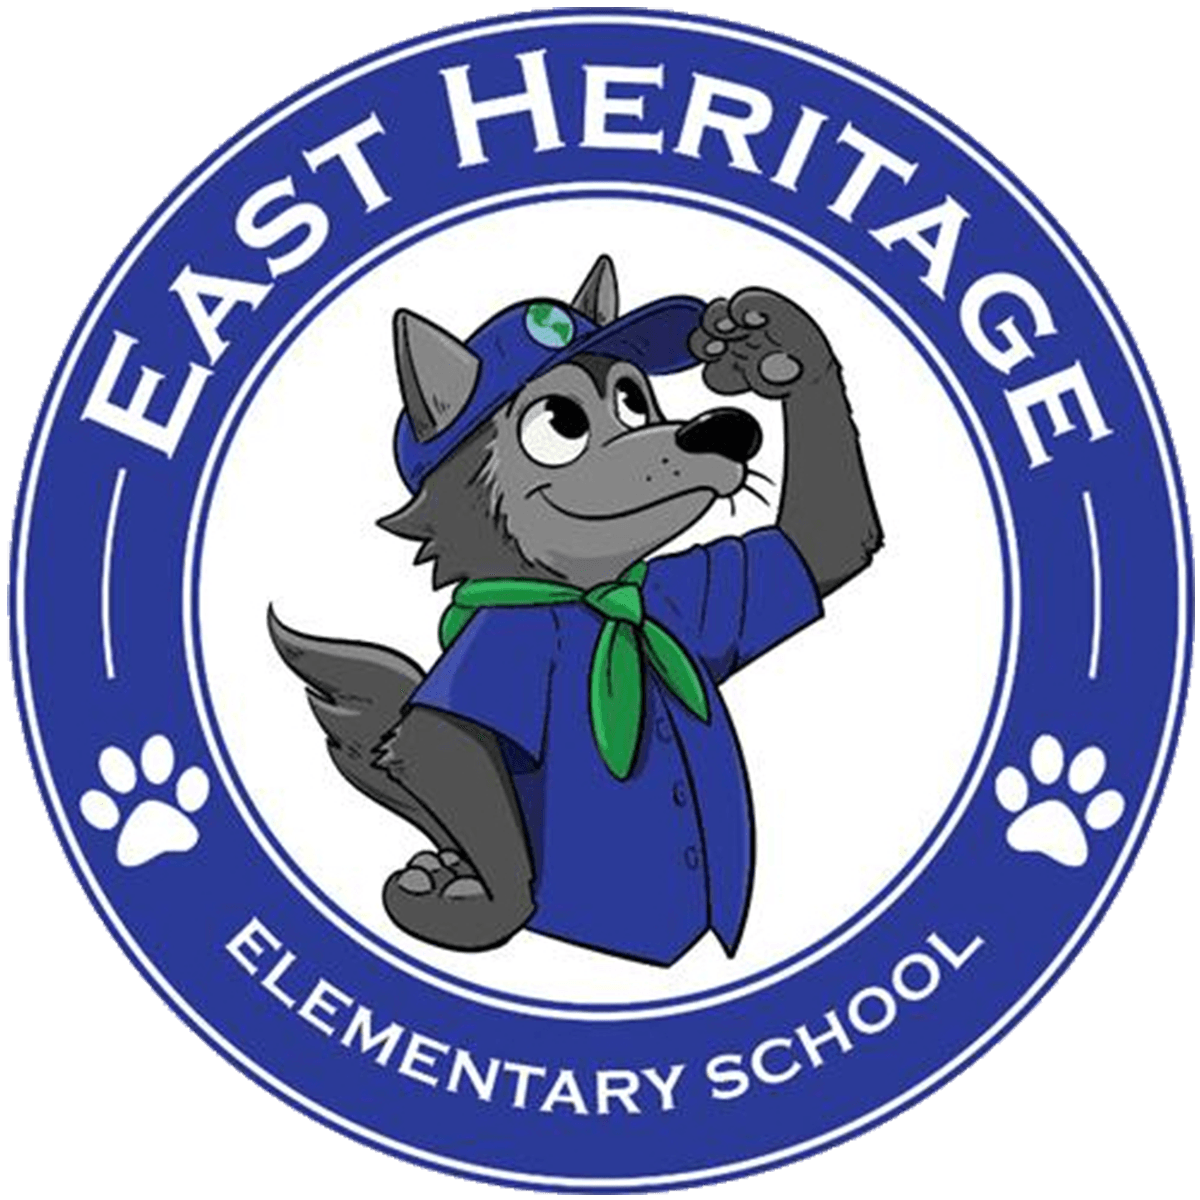 East Heritage Elementary School logo